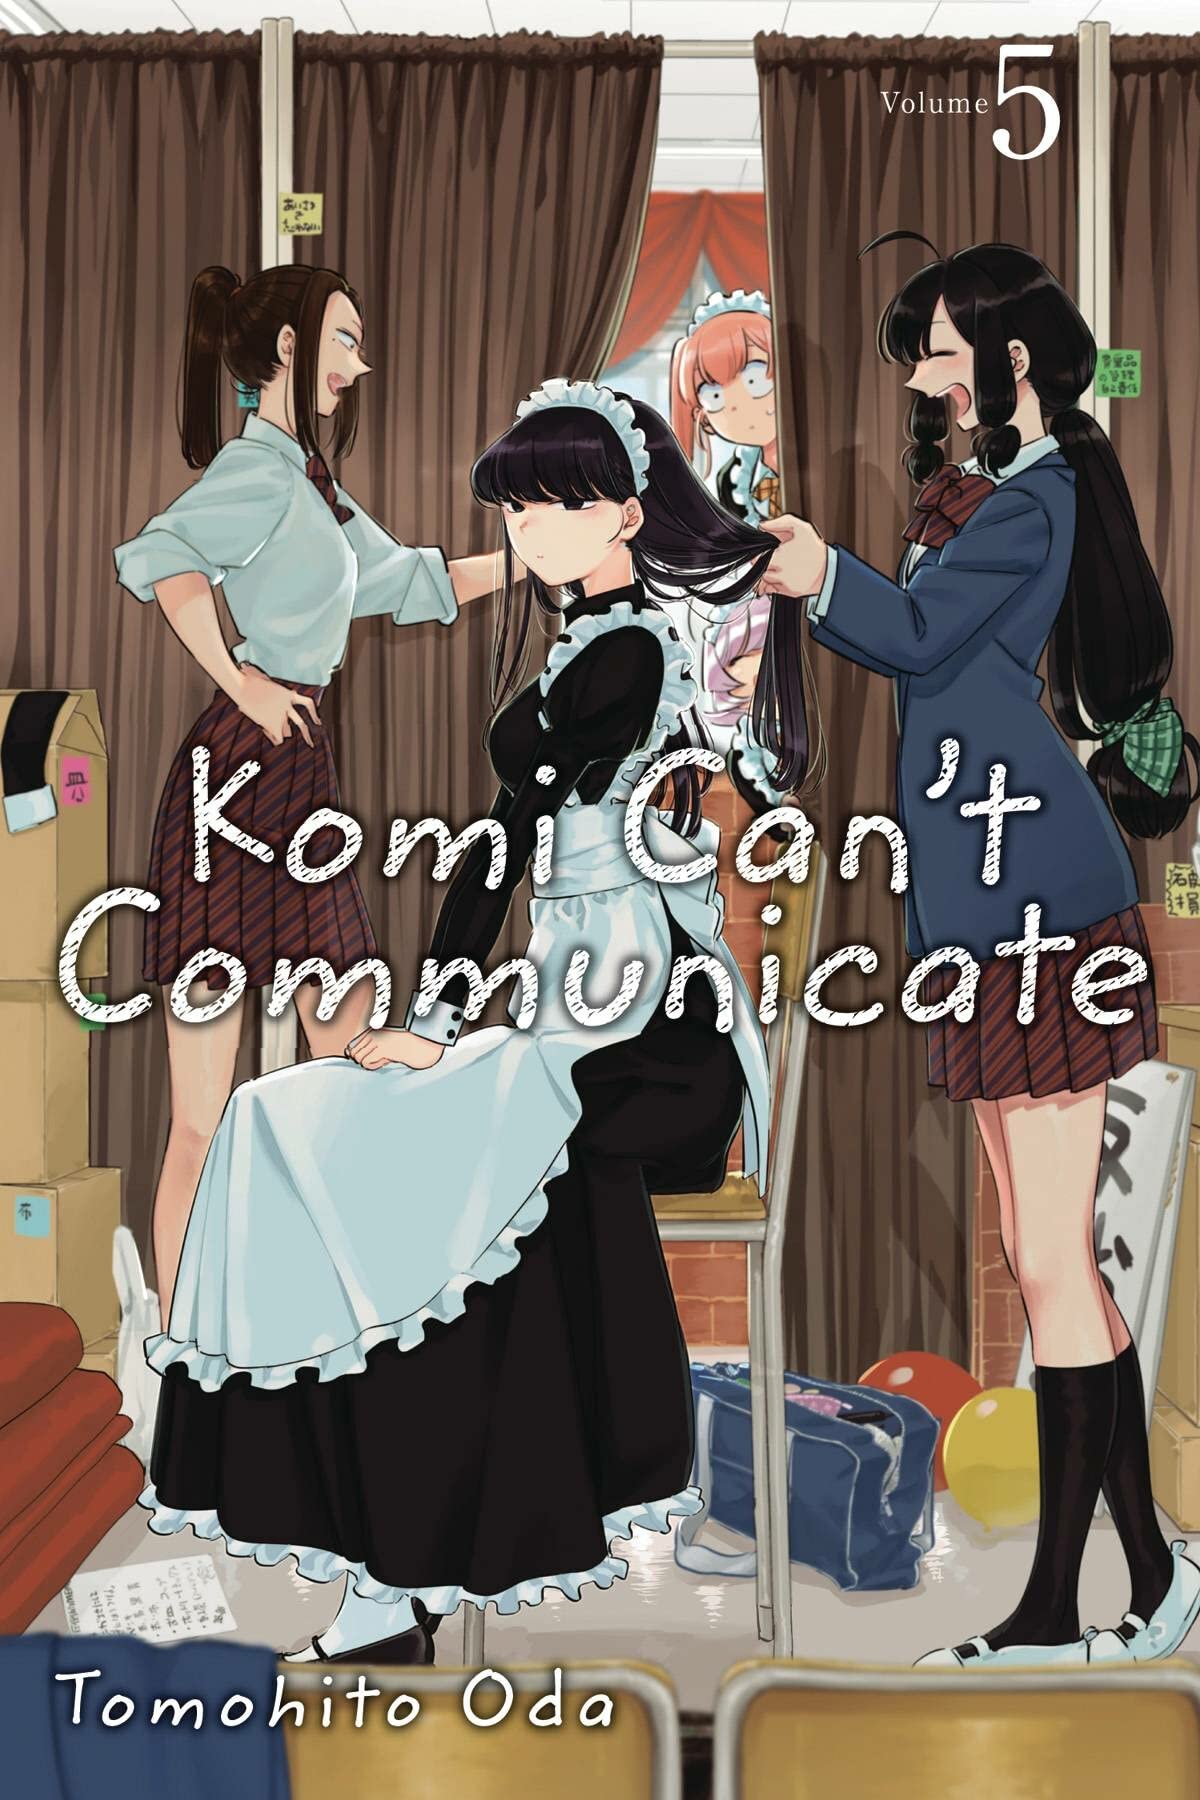 Download Komi San Anime Character Floral Print Wallpaper | Wallpapers.com